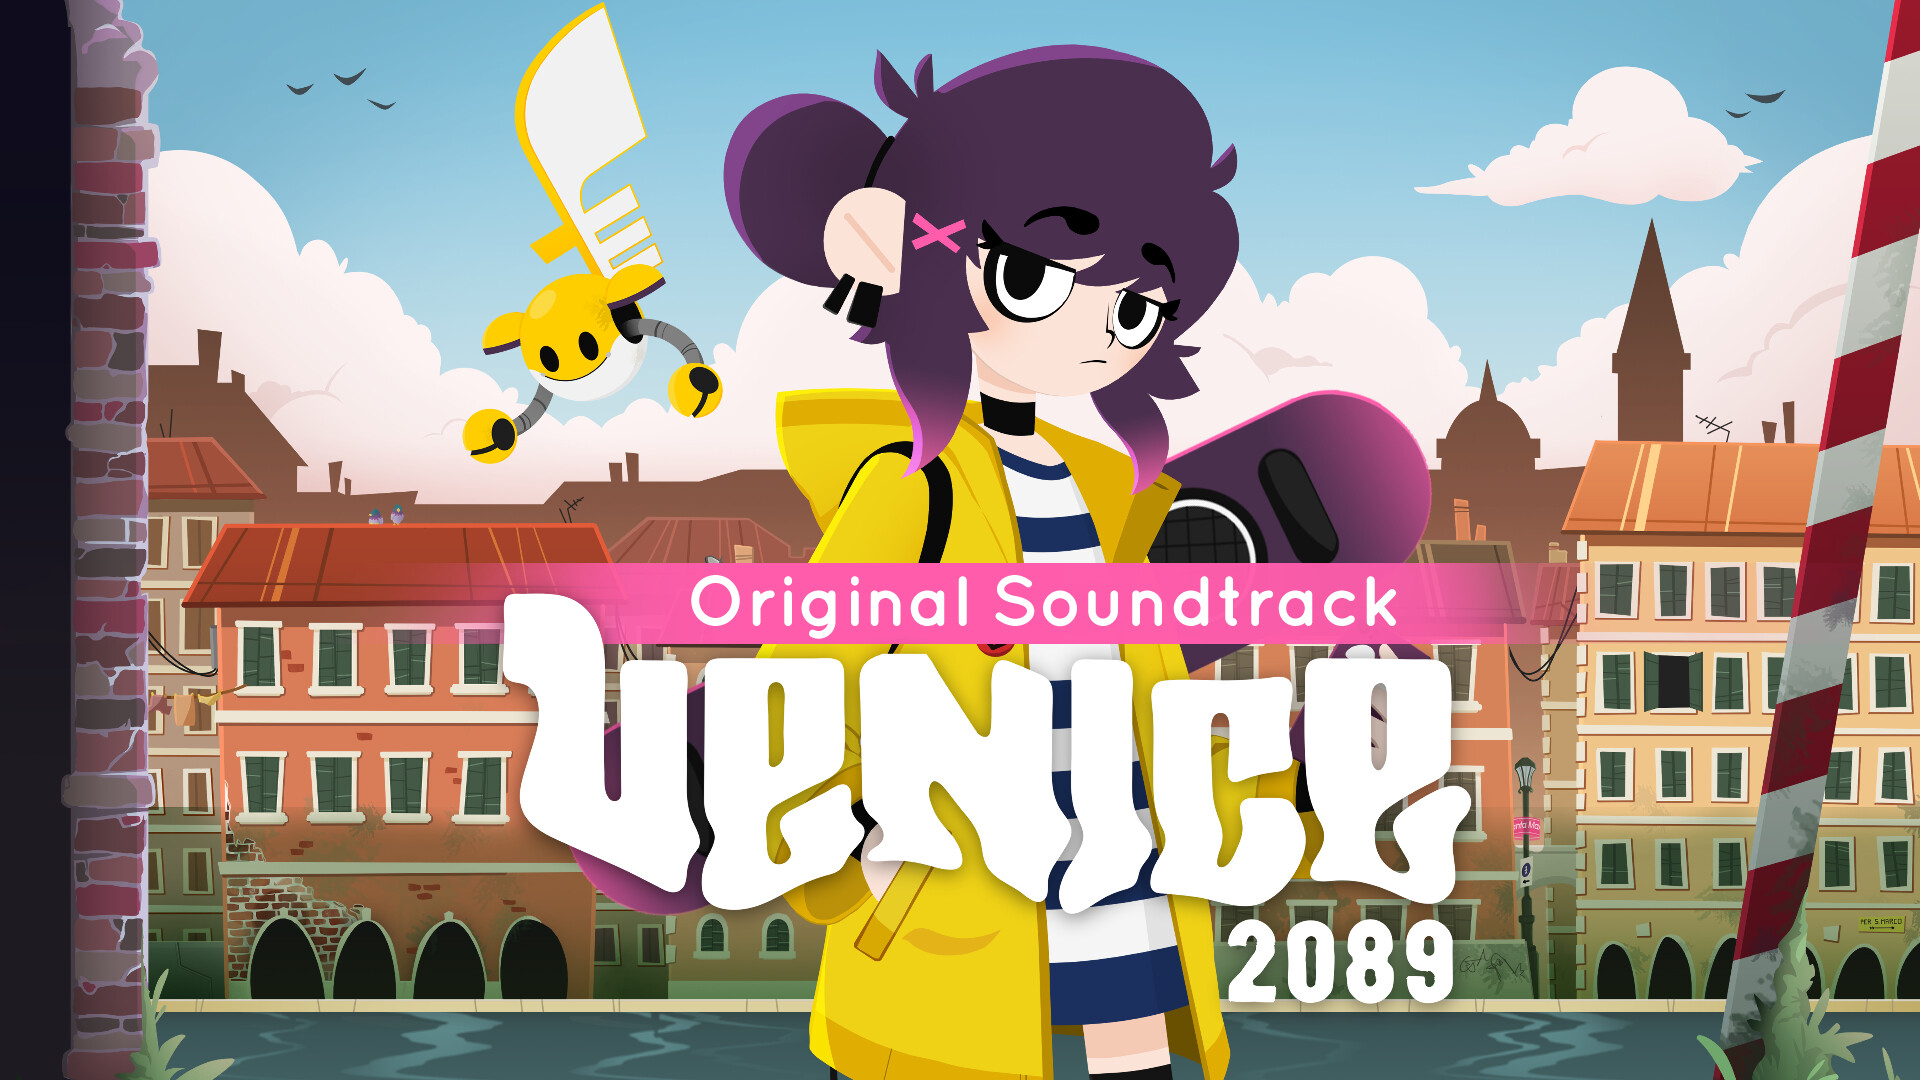 Venice 2089 - Original Soundtrack Featured Screenshot #1